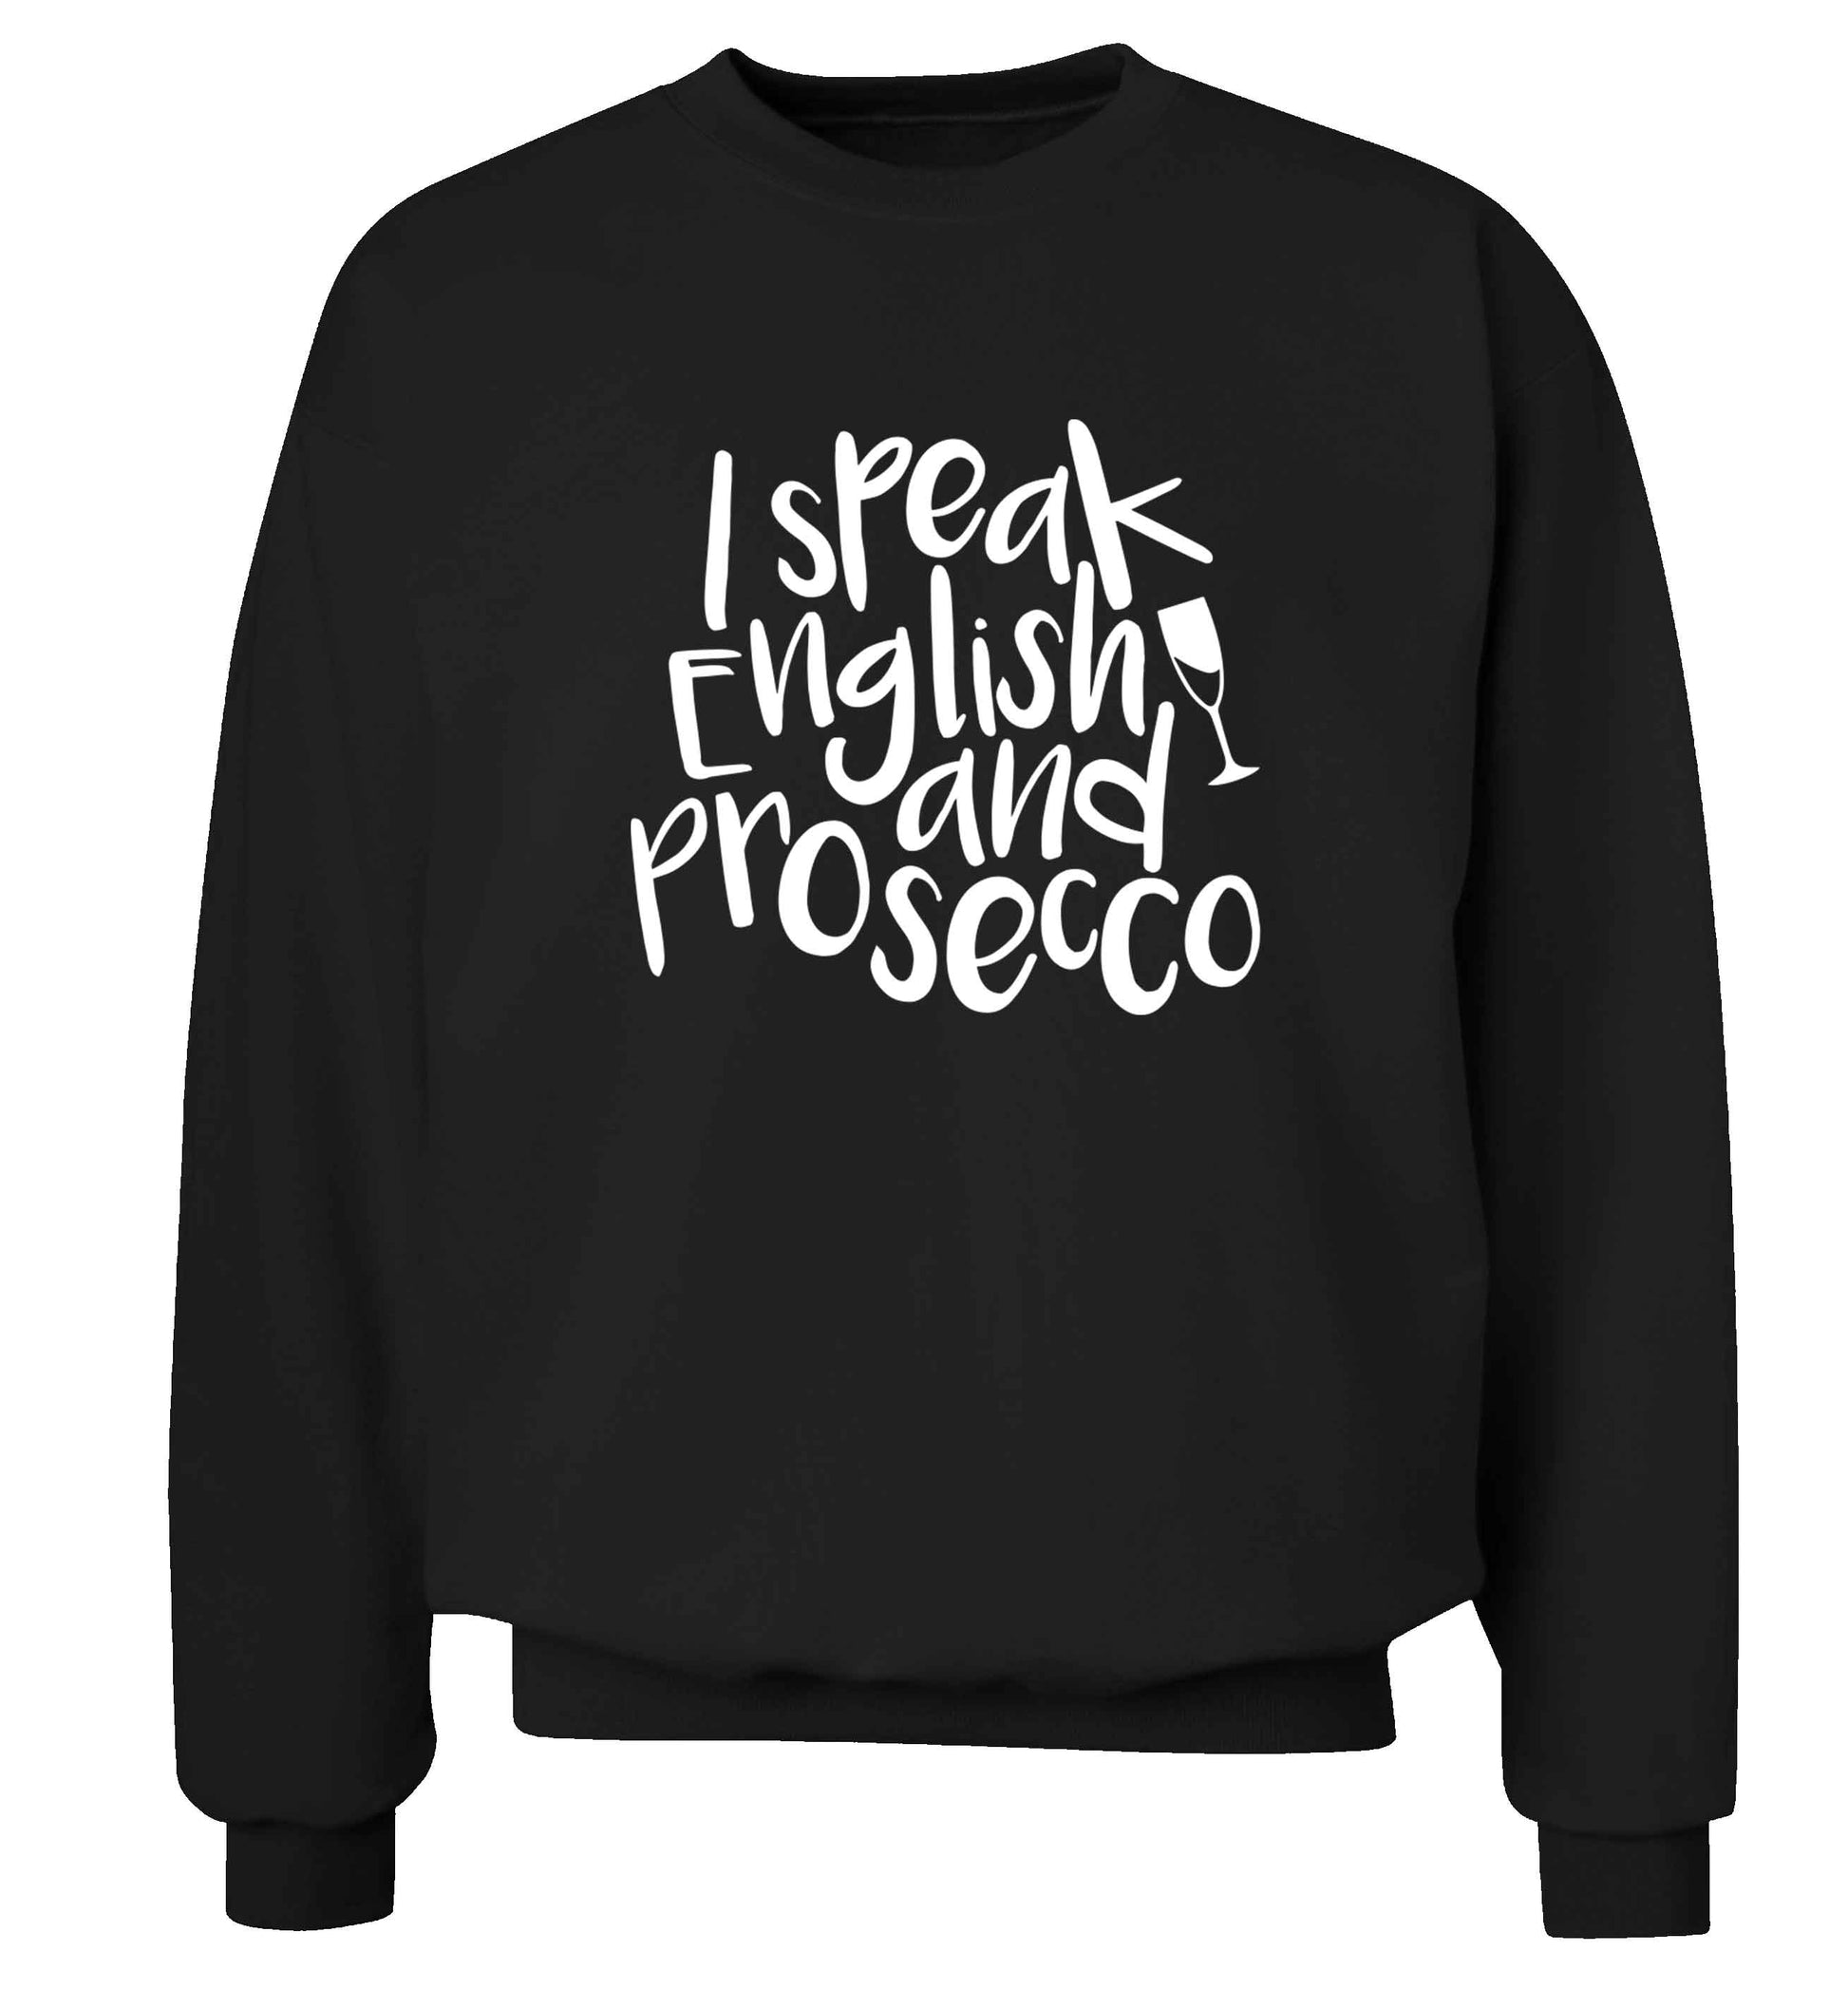 I speak English and prosecco Adult's unisex black Sweater 2XL